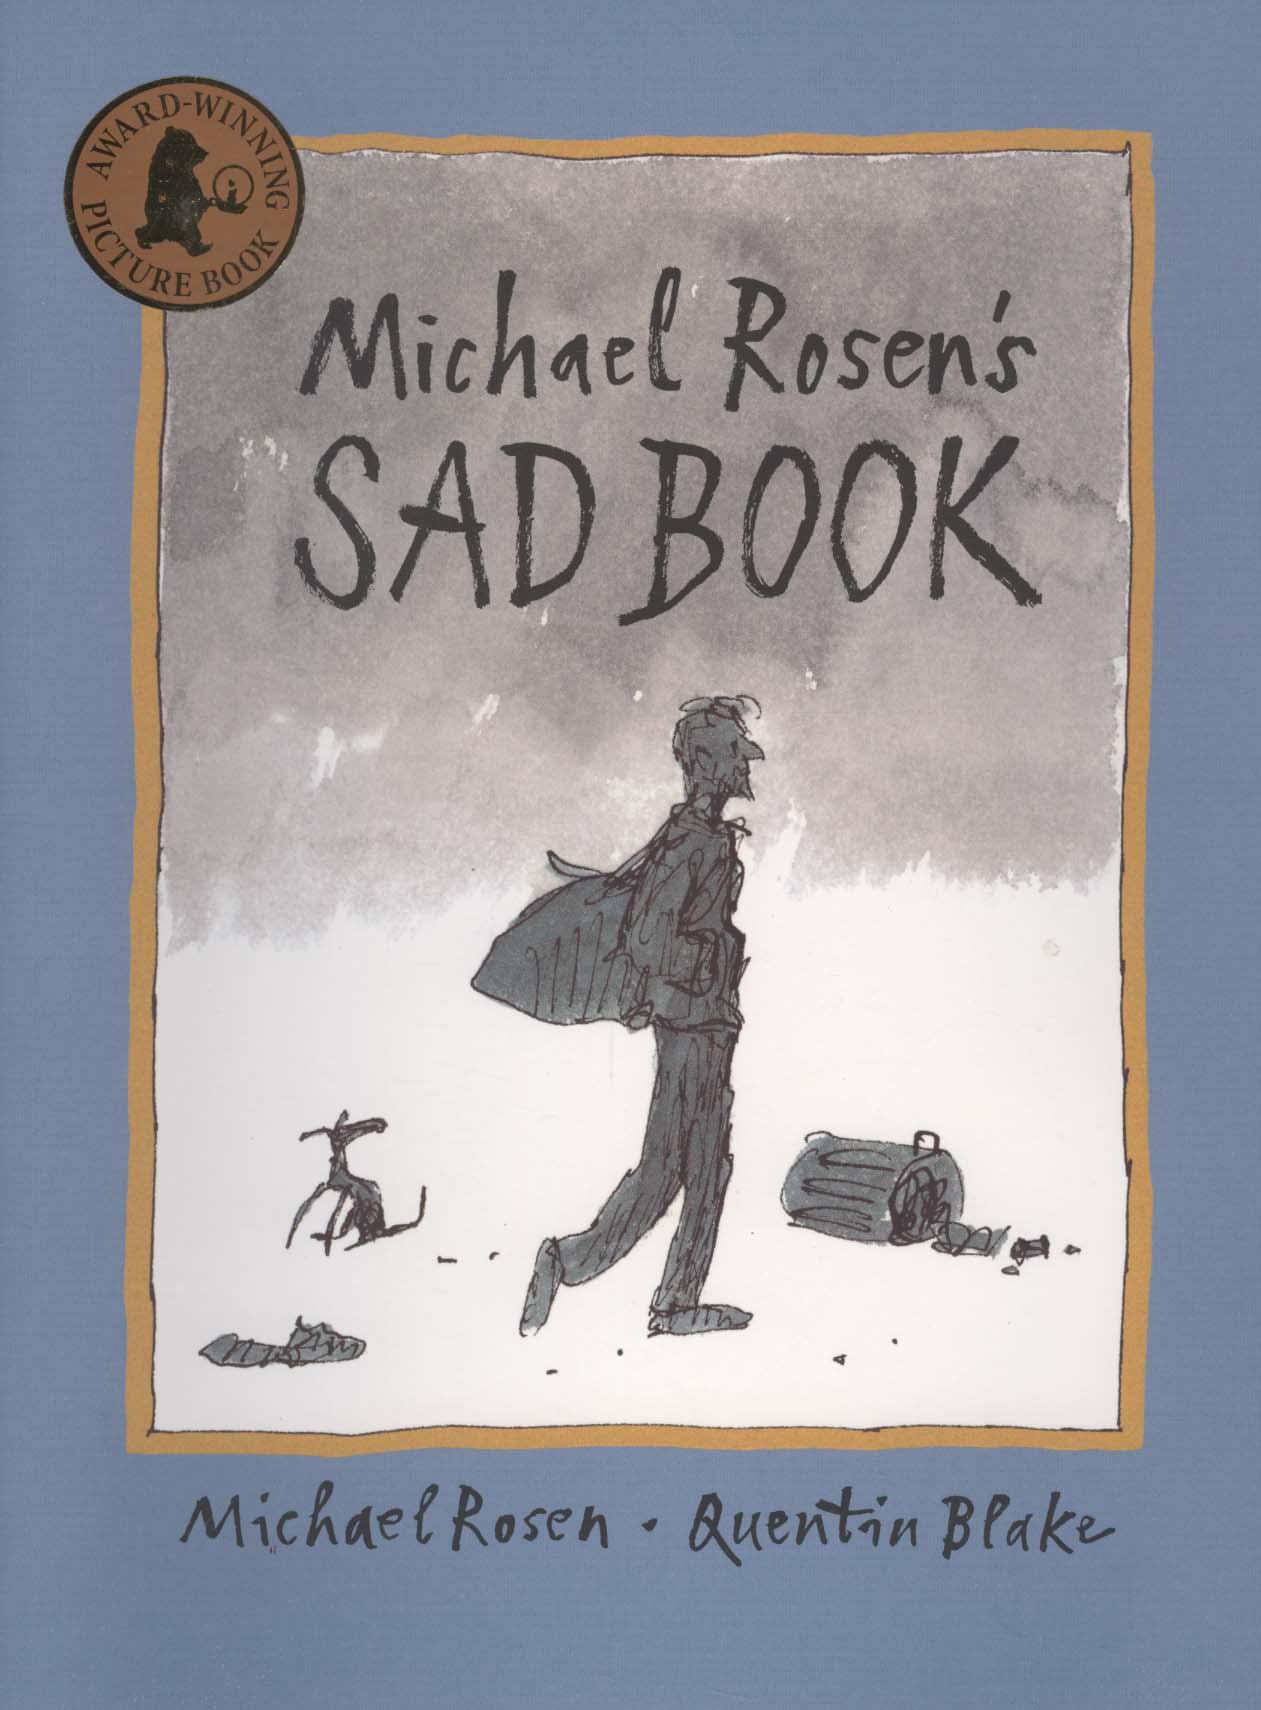 Michael Rosen's sad book